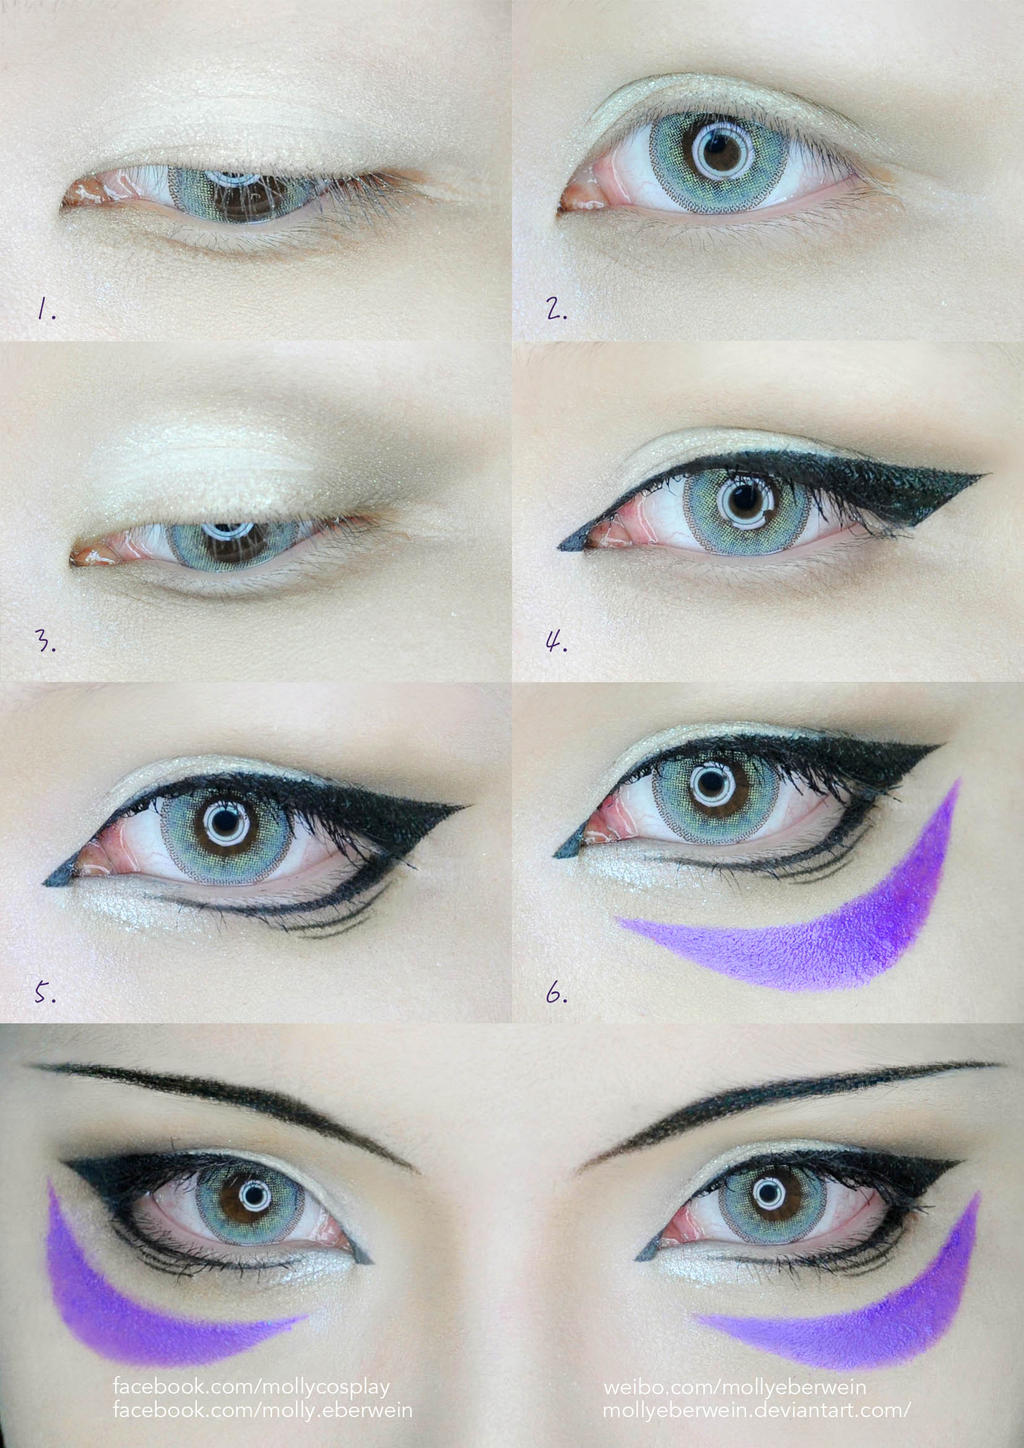 Cosplay Eyes Makeup Tutorial For Shonen By Mollyeberwein On DeviantArt